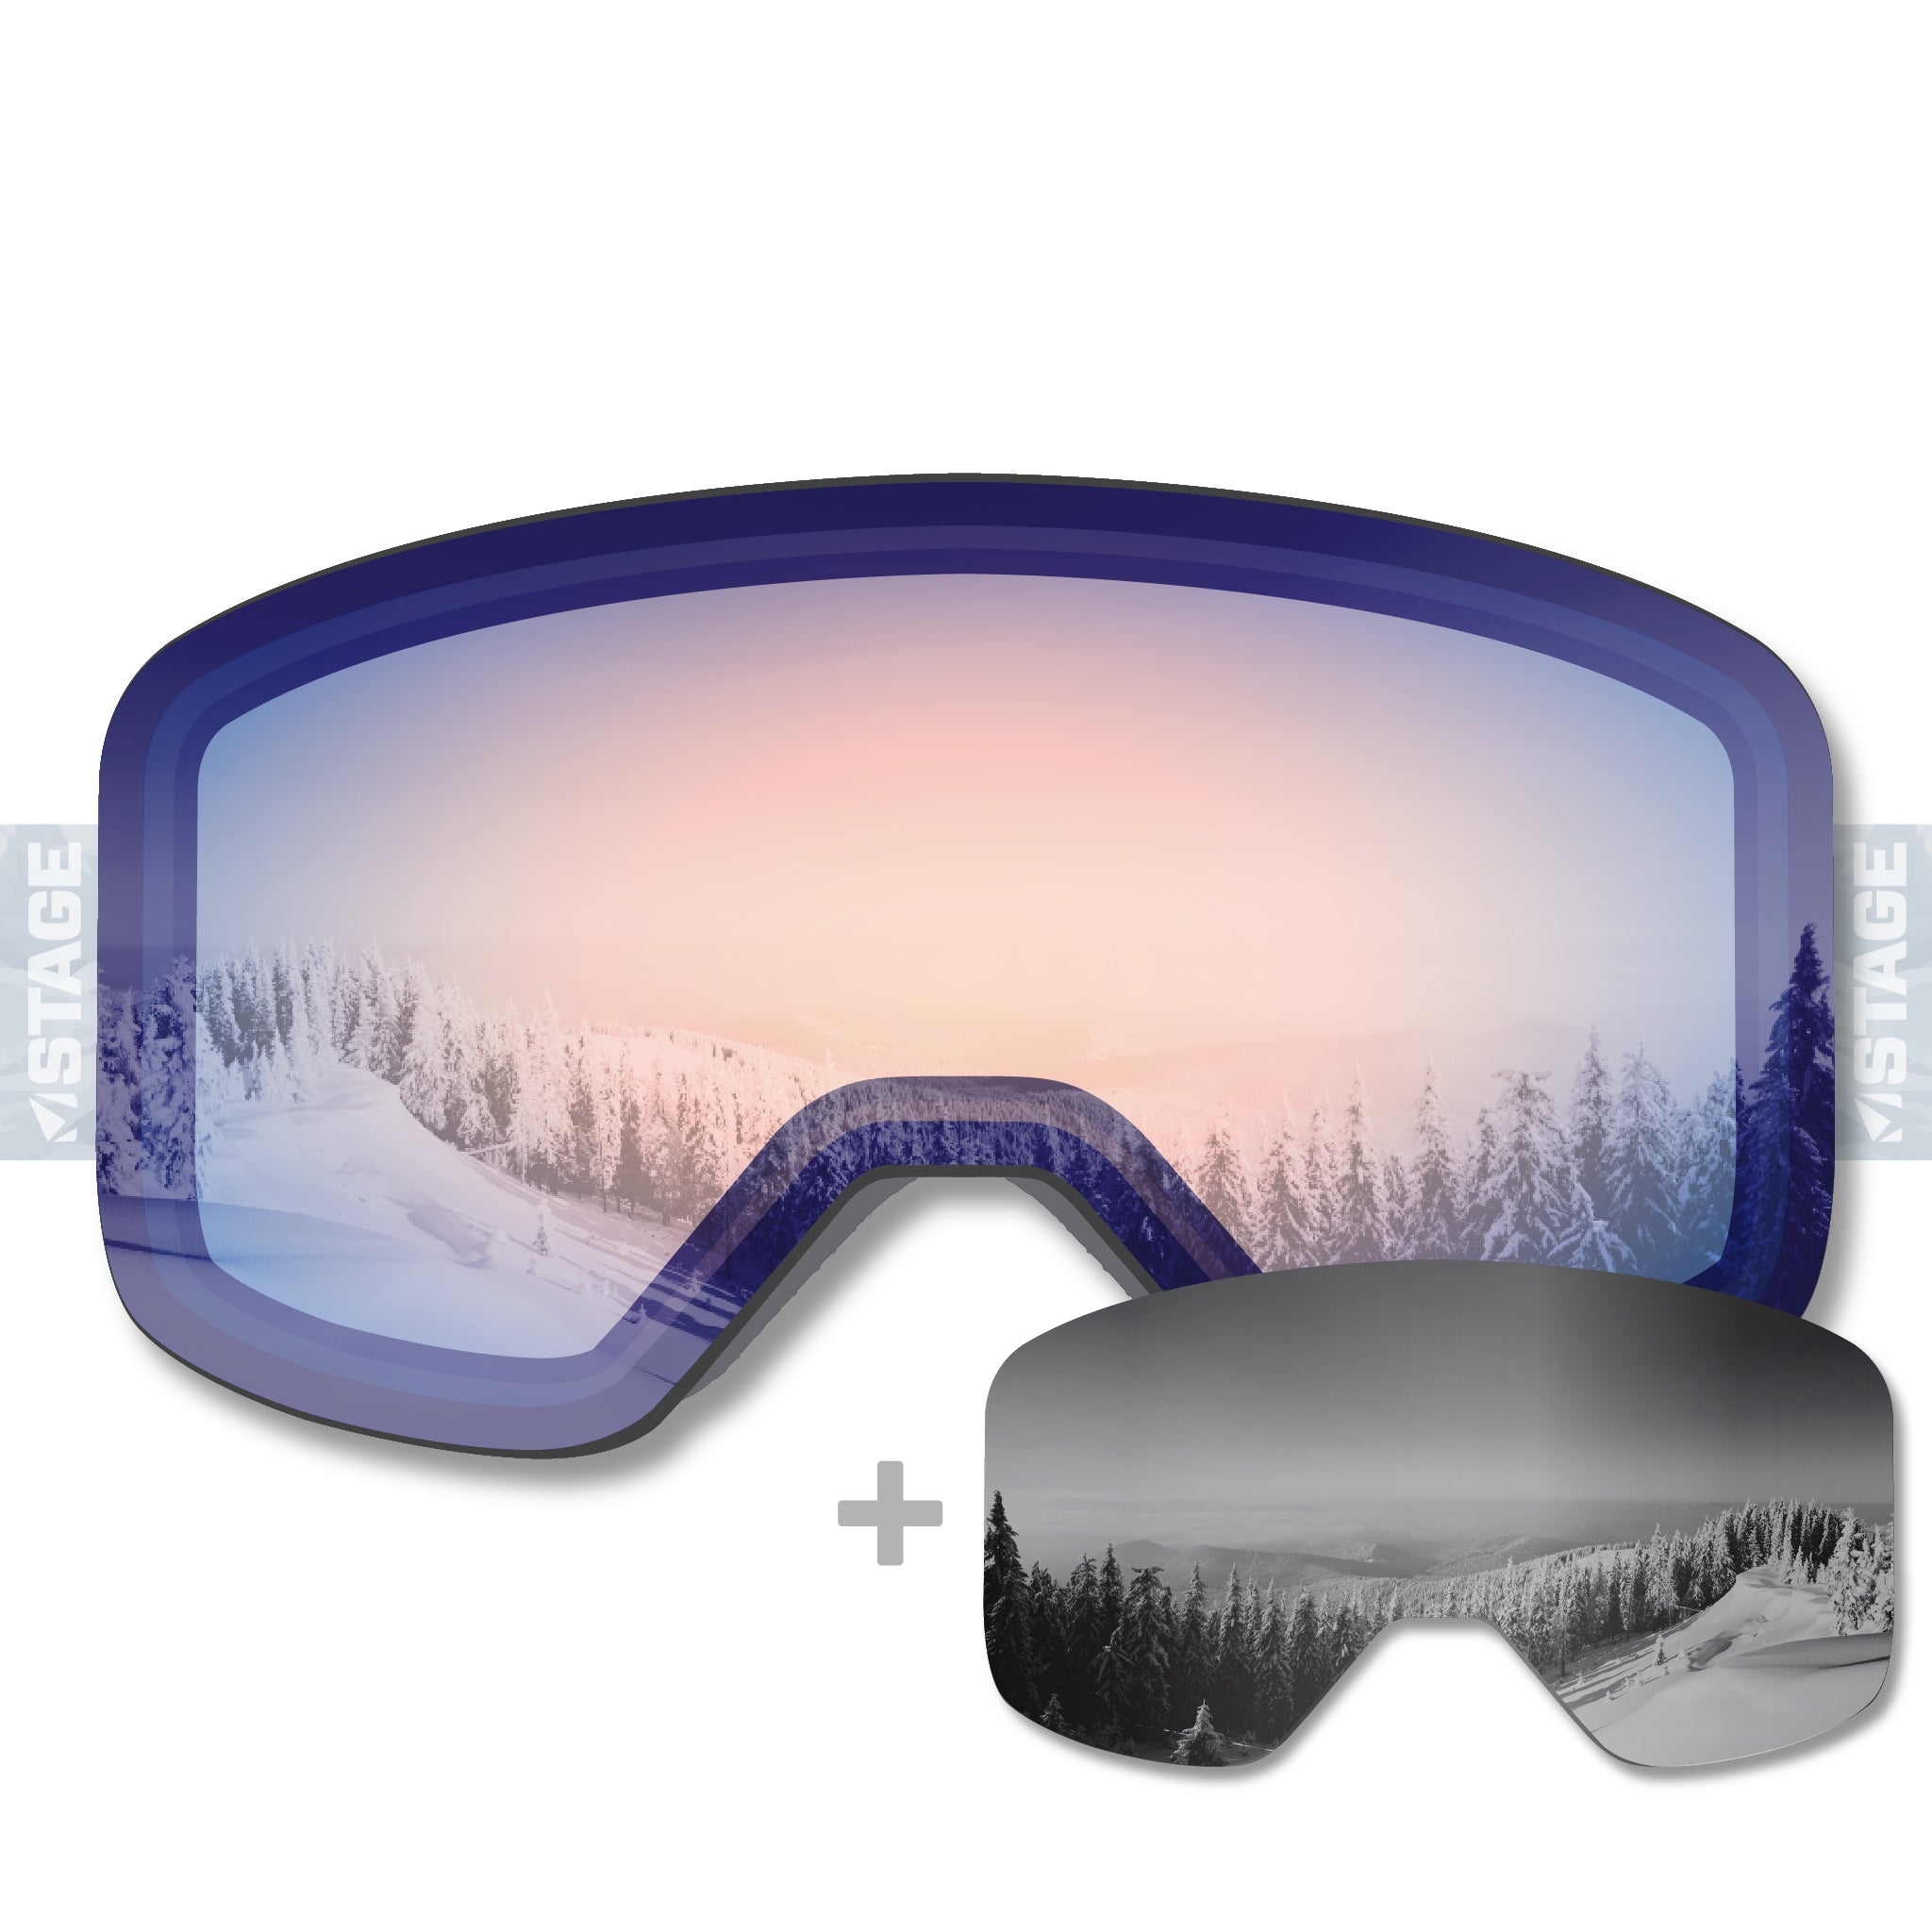 NWAC Propnetic - Magnetic Ski Goggle + Bonus Lens